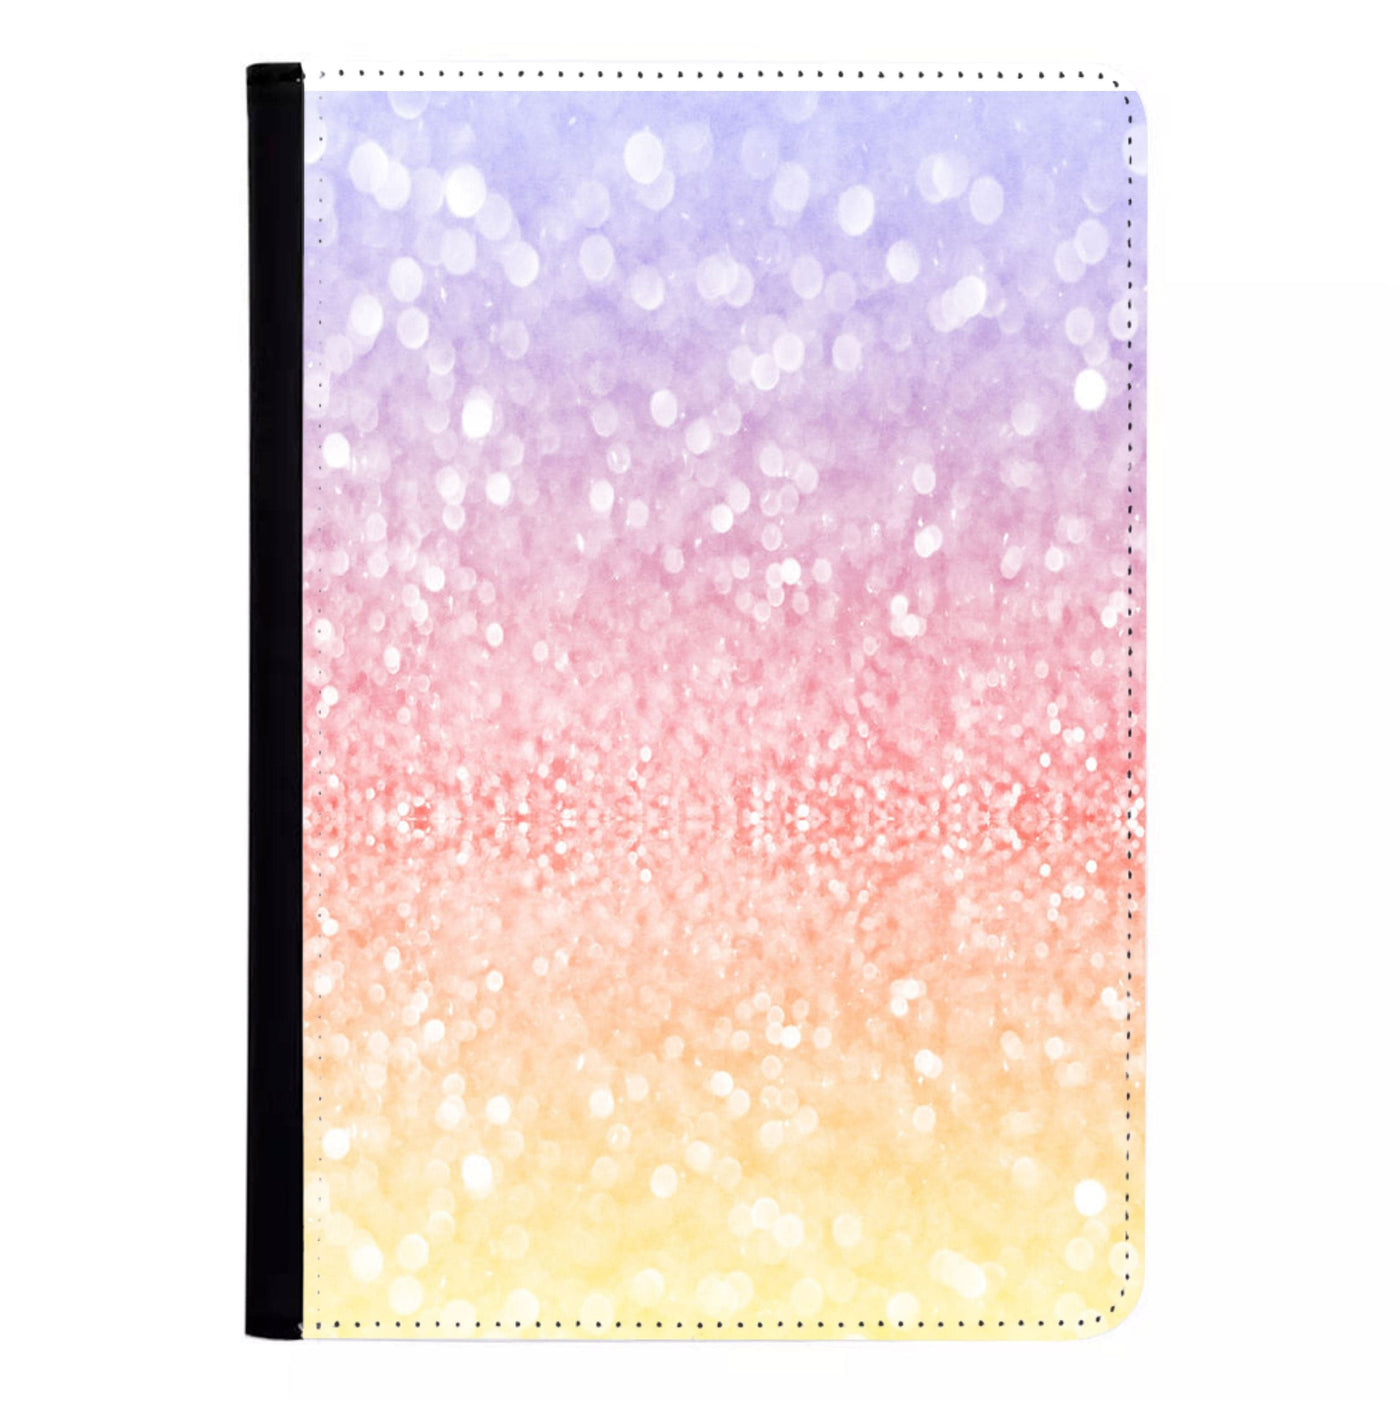 Glitter Splash Tumblr iPad Cover